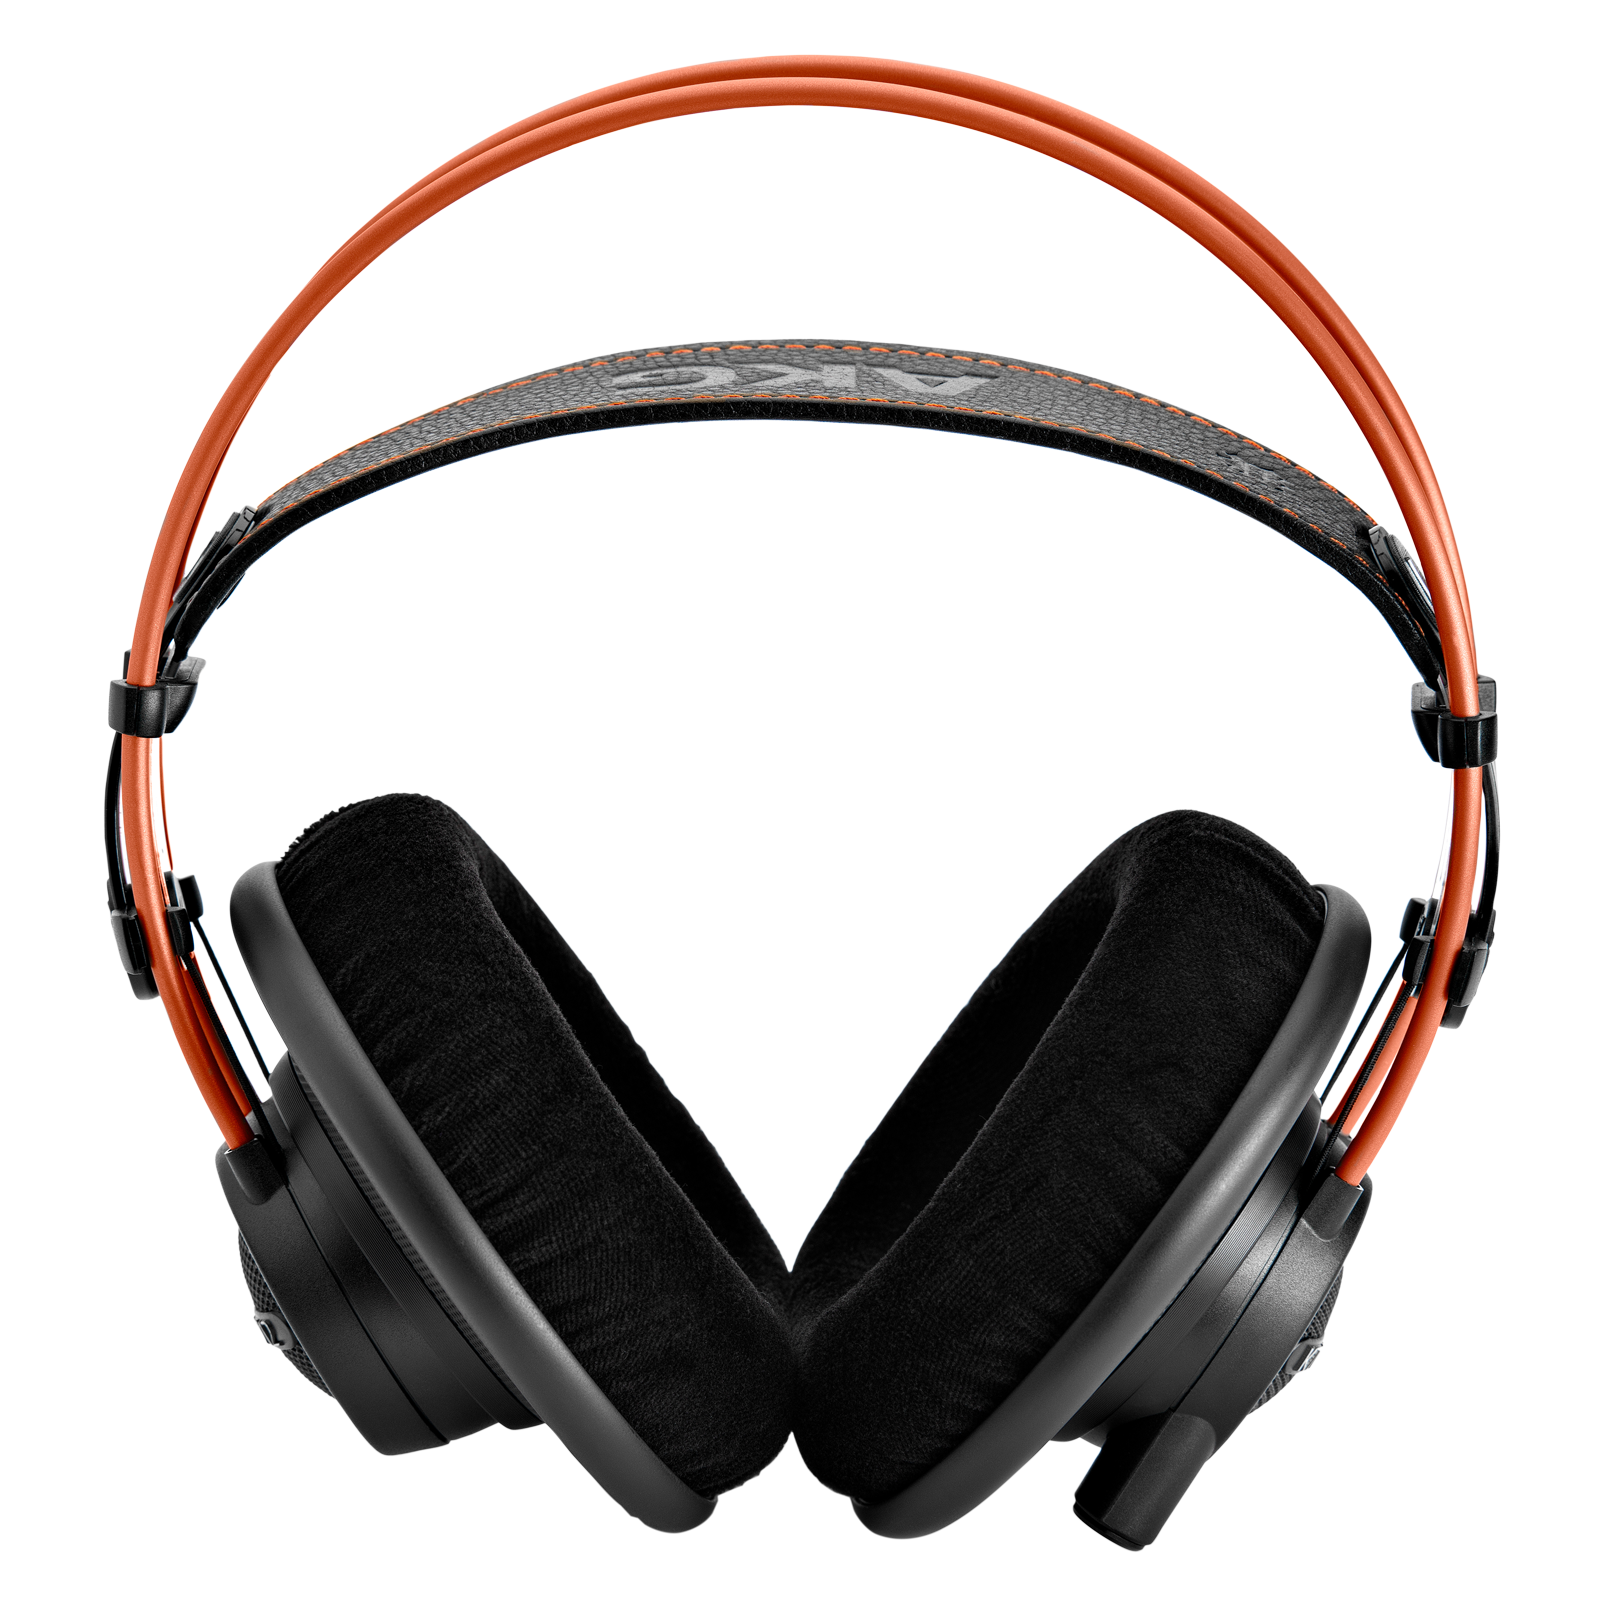 K712 PRO - Black - Reference studio headphones  - Front